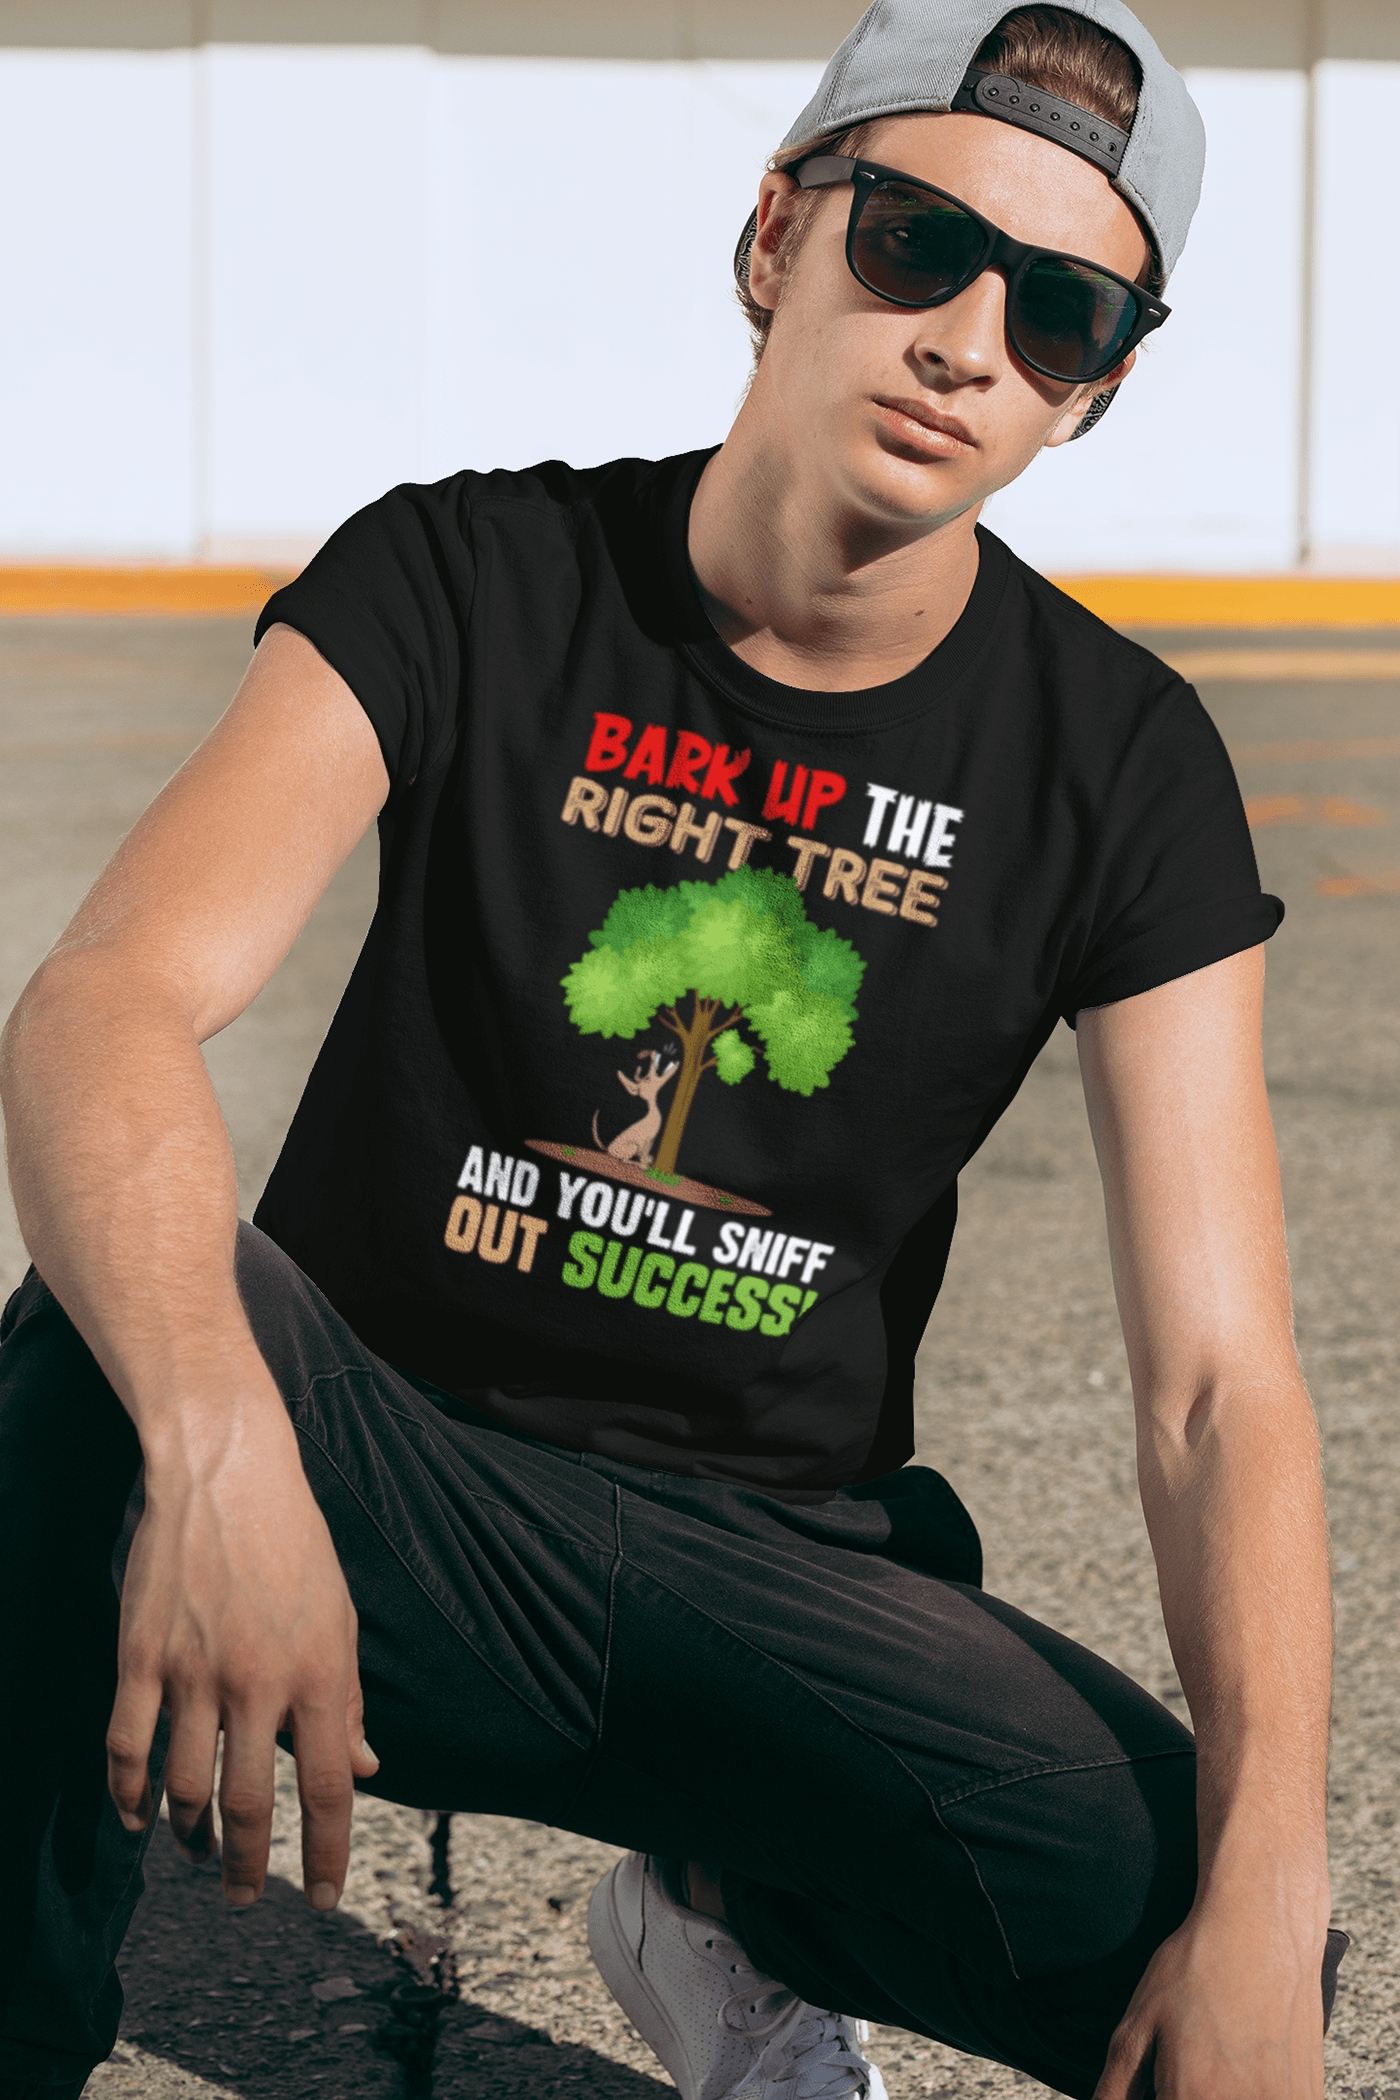 motivational t-shirt typography design amazon merch Success Story Print on demand Pet animal Bark up the right tree dog training Merch by Amazon t-shirt